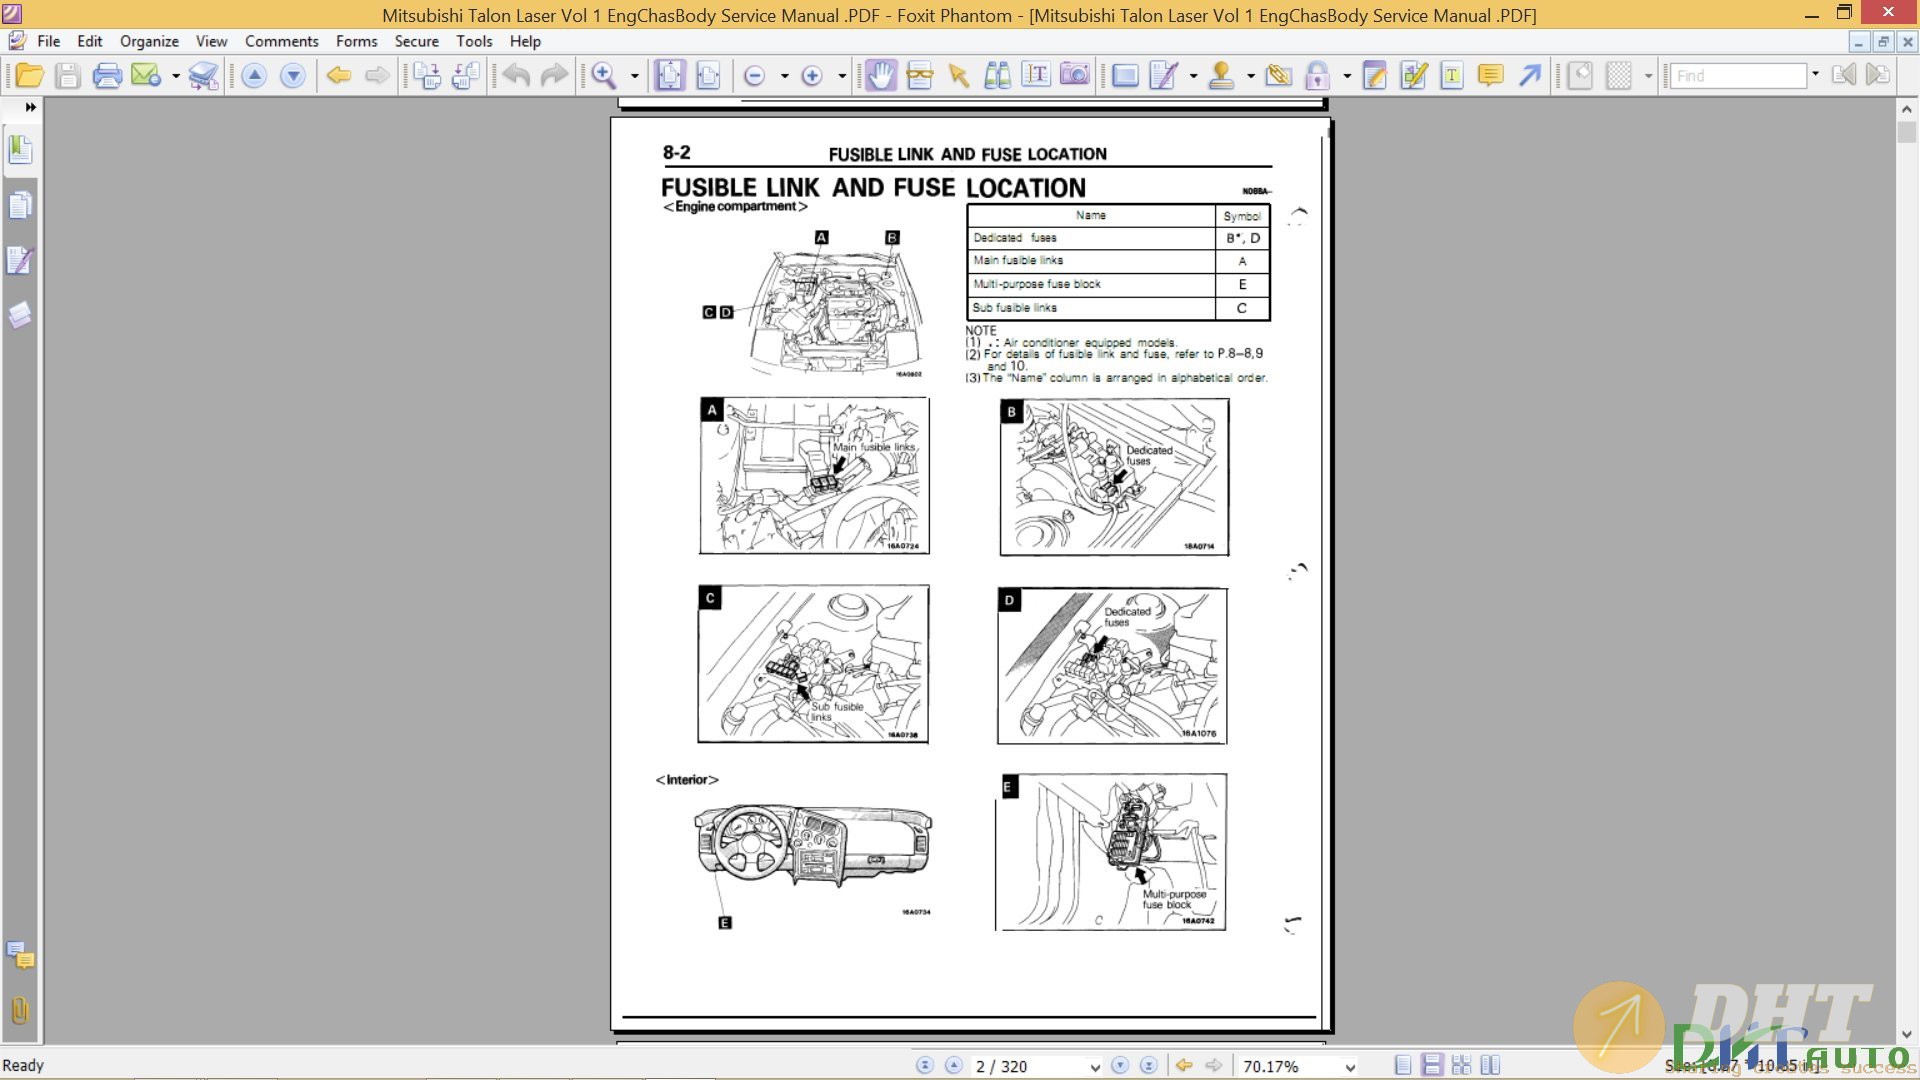 Mitsubishi_Talon_Laser_Vol2_Engchasbody_Service_Manual-0.jpg